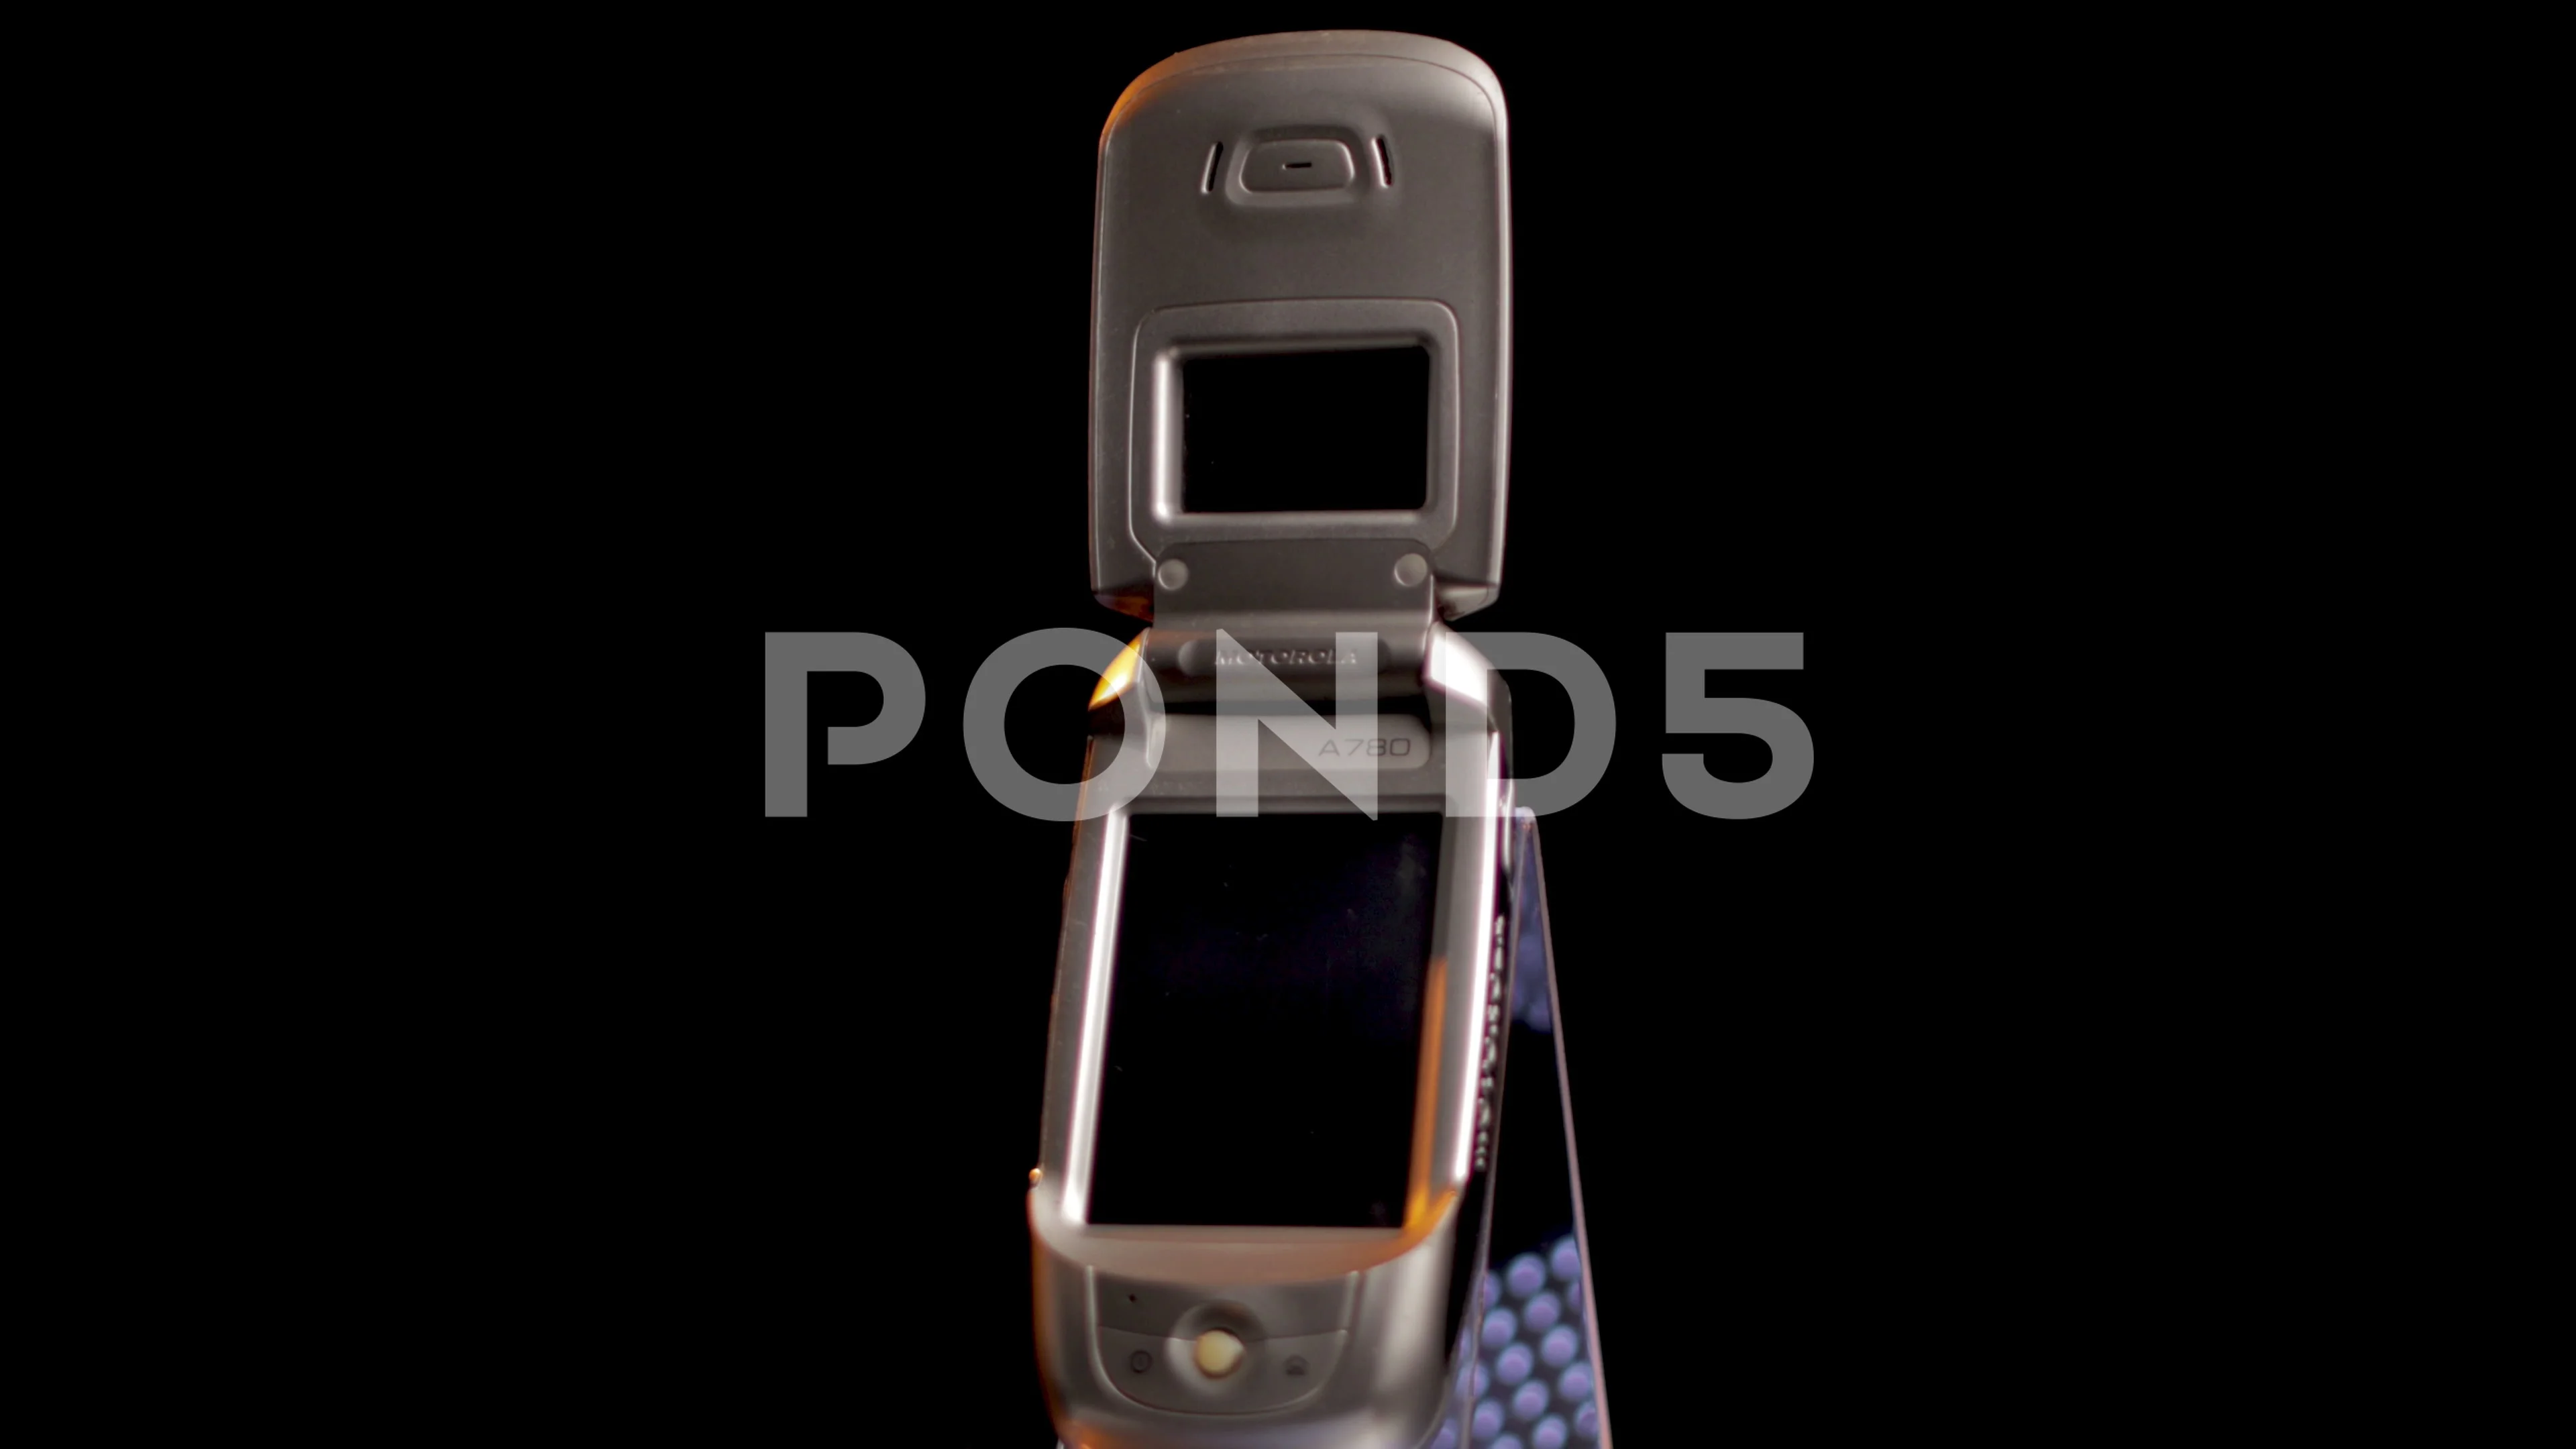 Kenia Correctie wet Motorola A780. Vintage Mobile Phone, Spi... | Stock Video | Pond5